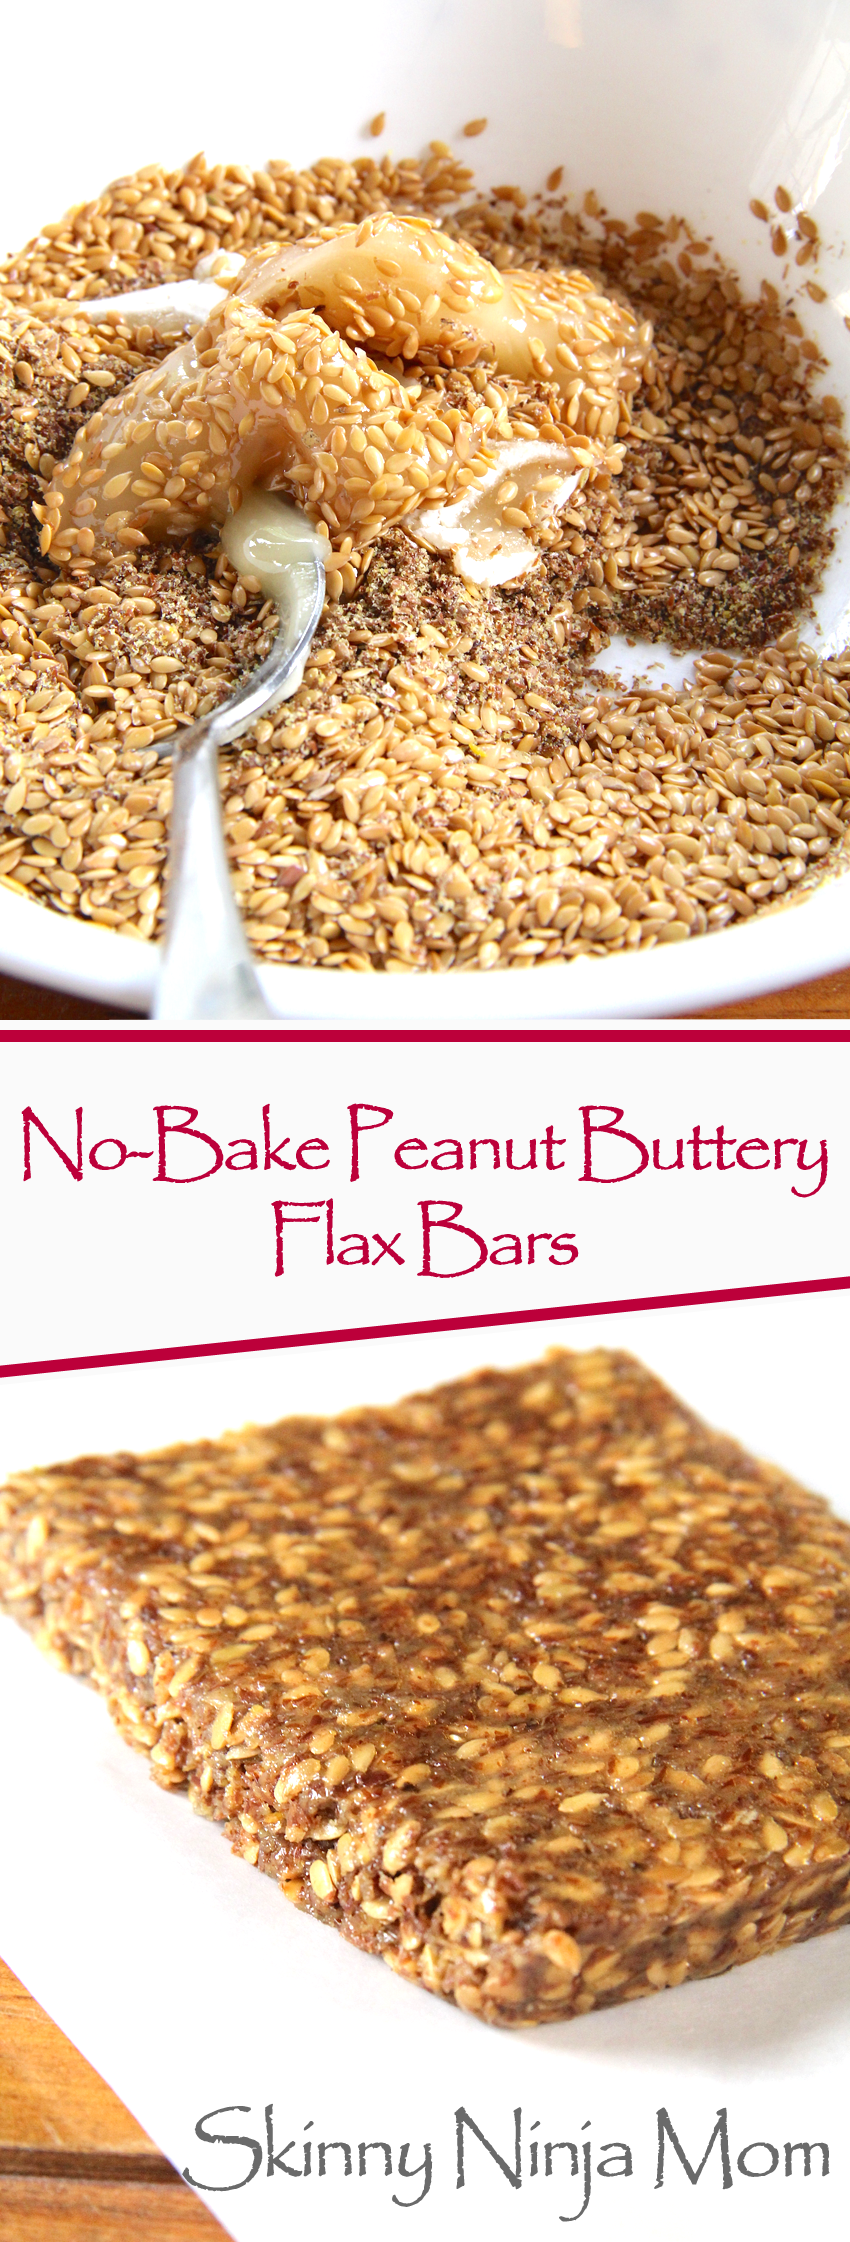 No-Bake Peanut Buttery Flax Bars